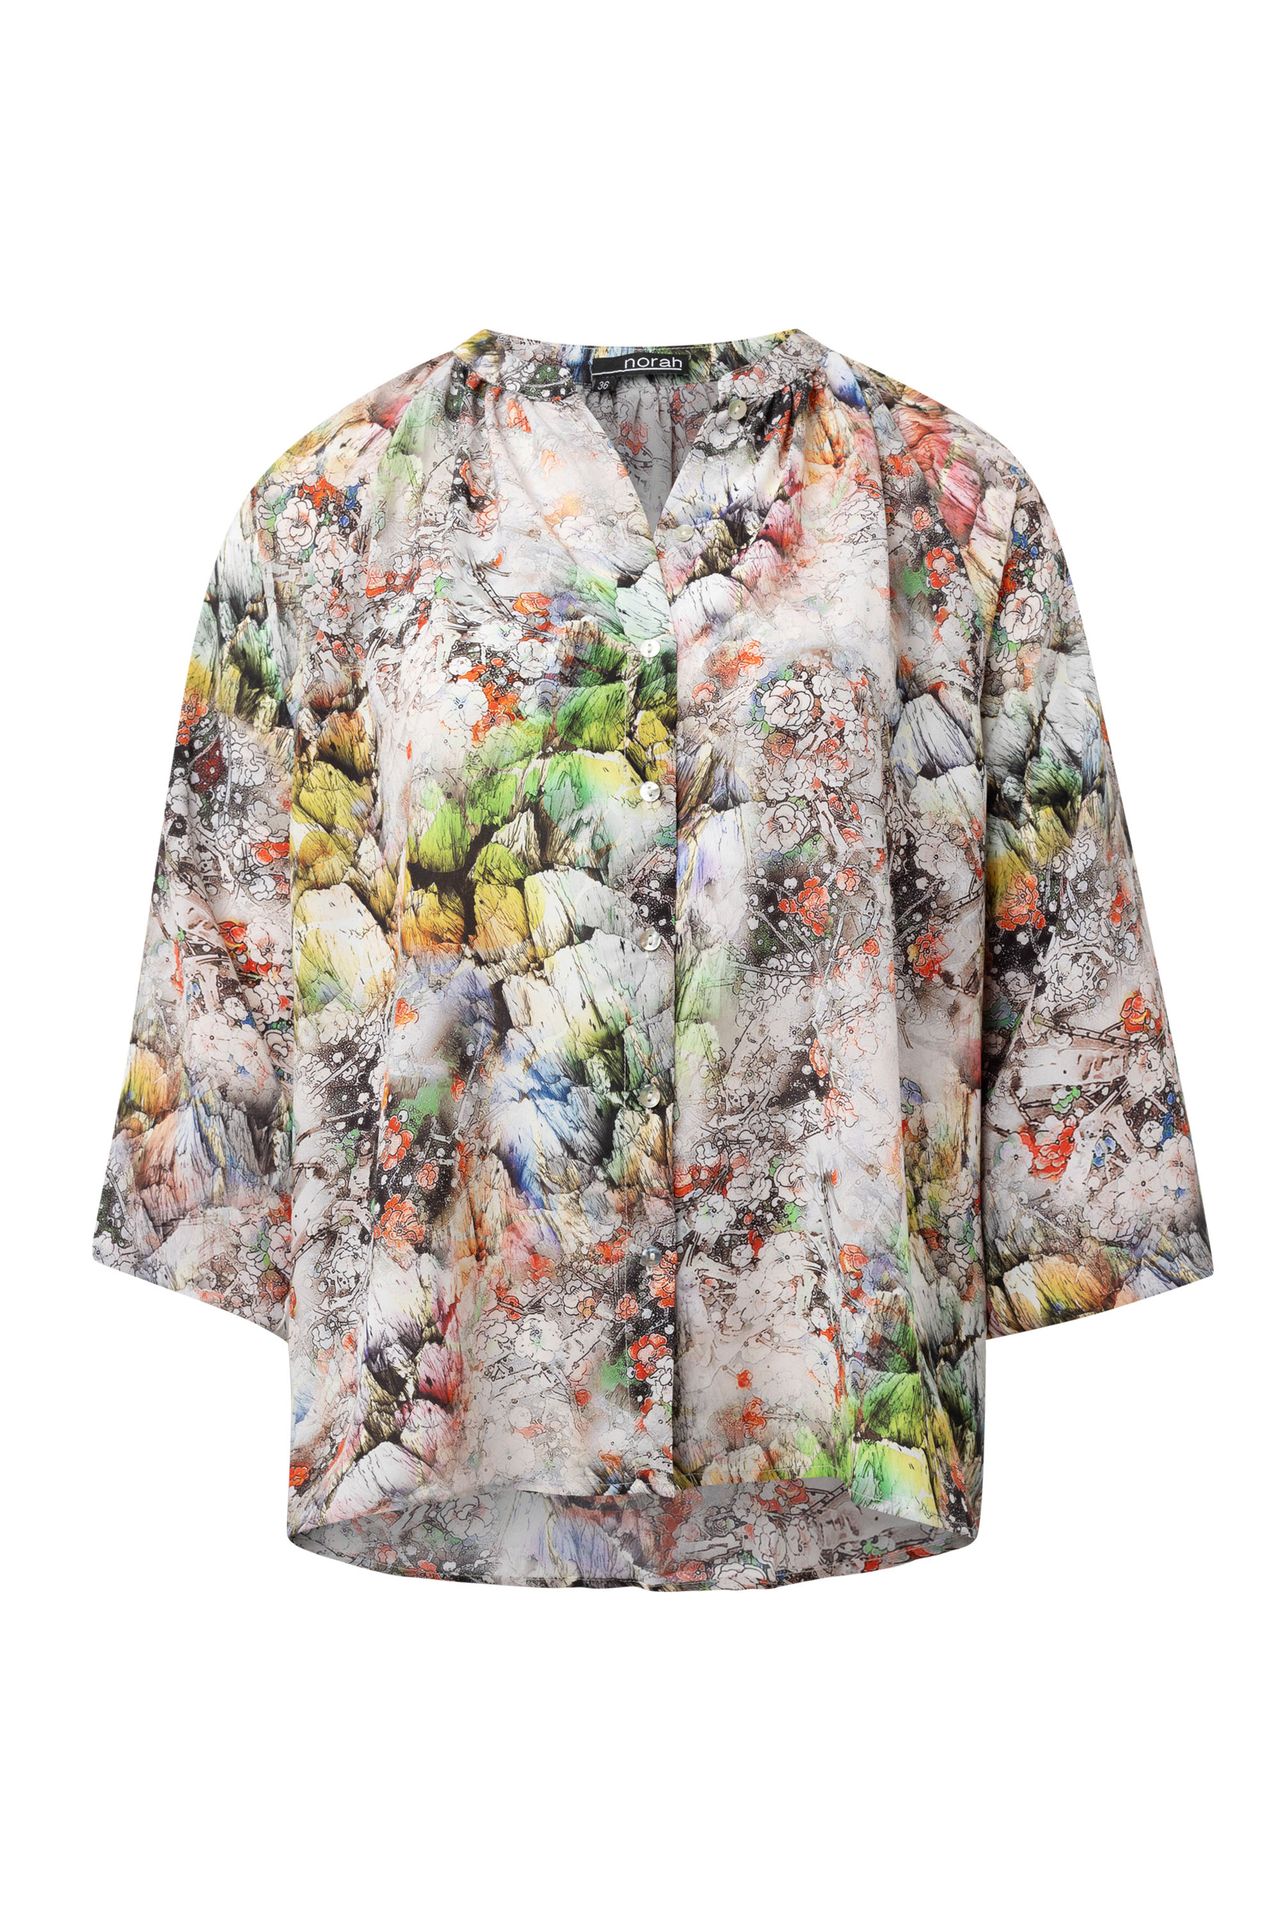 Norah Meerkleurige blouse multicolor 214418-002